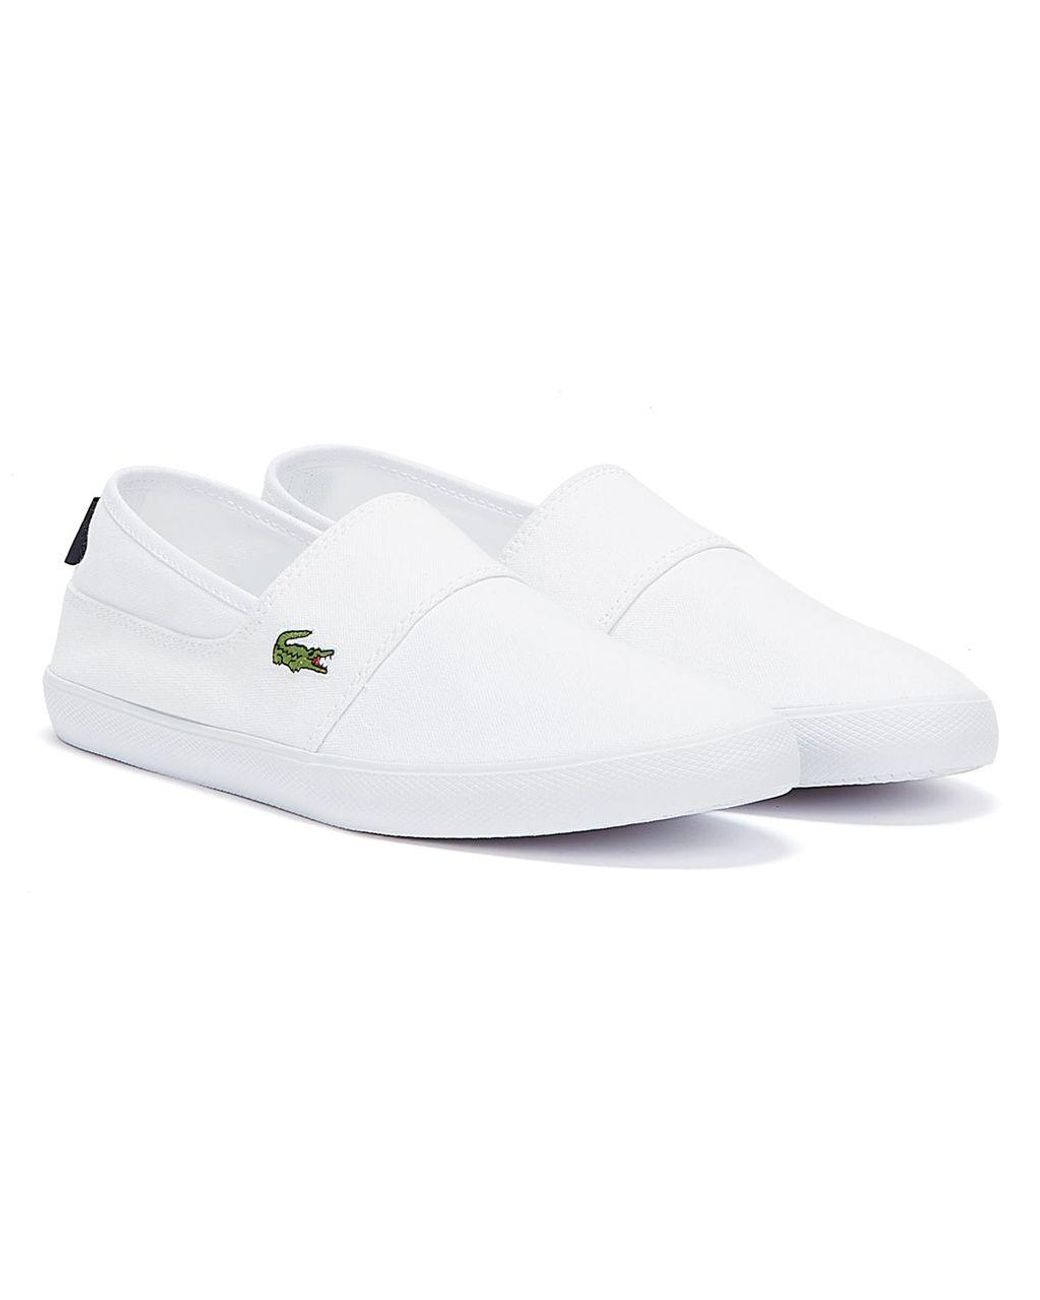 gå på pension Supermarked Panda Lacoste Canvas Marice Shoes - White for Men - Save 35% - Lyst